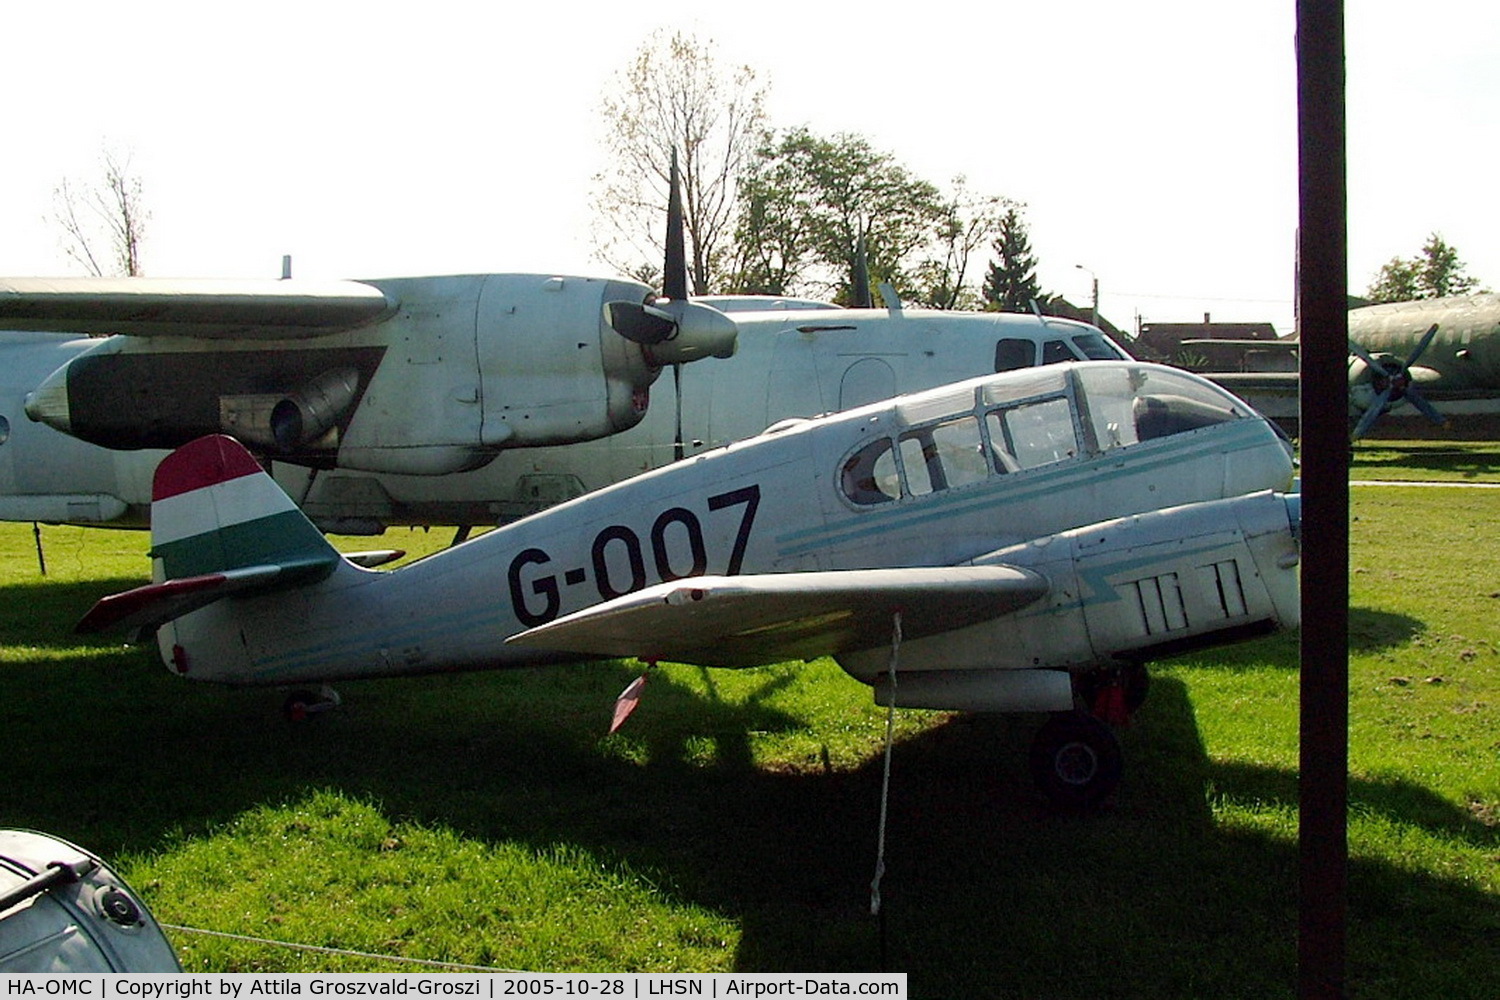 HA-OMC, 1958 Let Aero Ae-45S Super C/N 04-009, Szolnok Szandaszöllös Airplane Museum. G-007